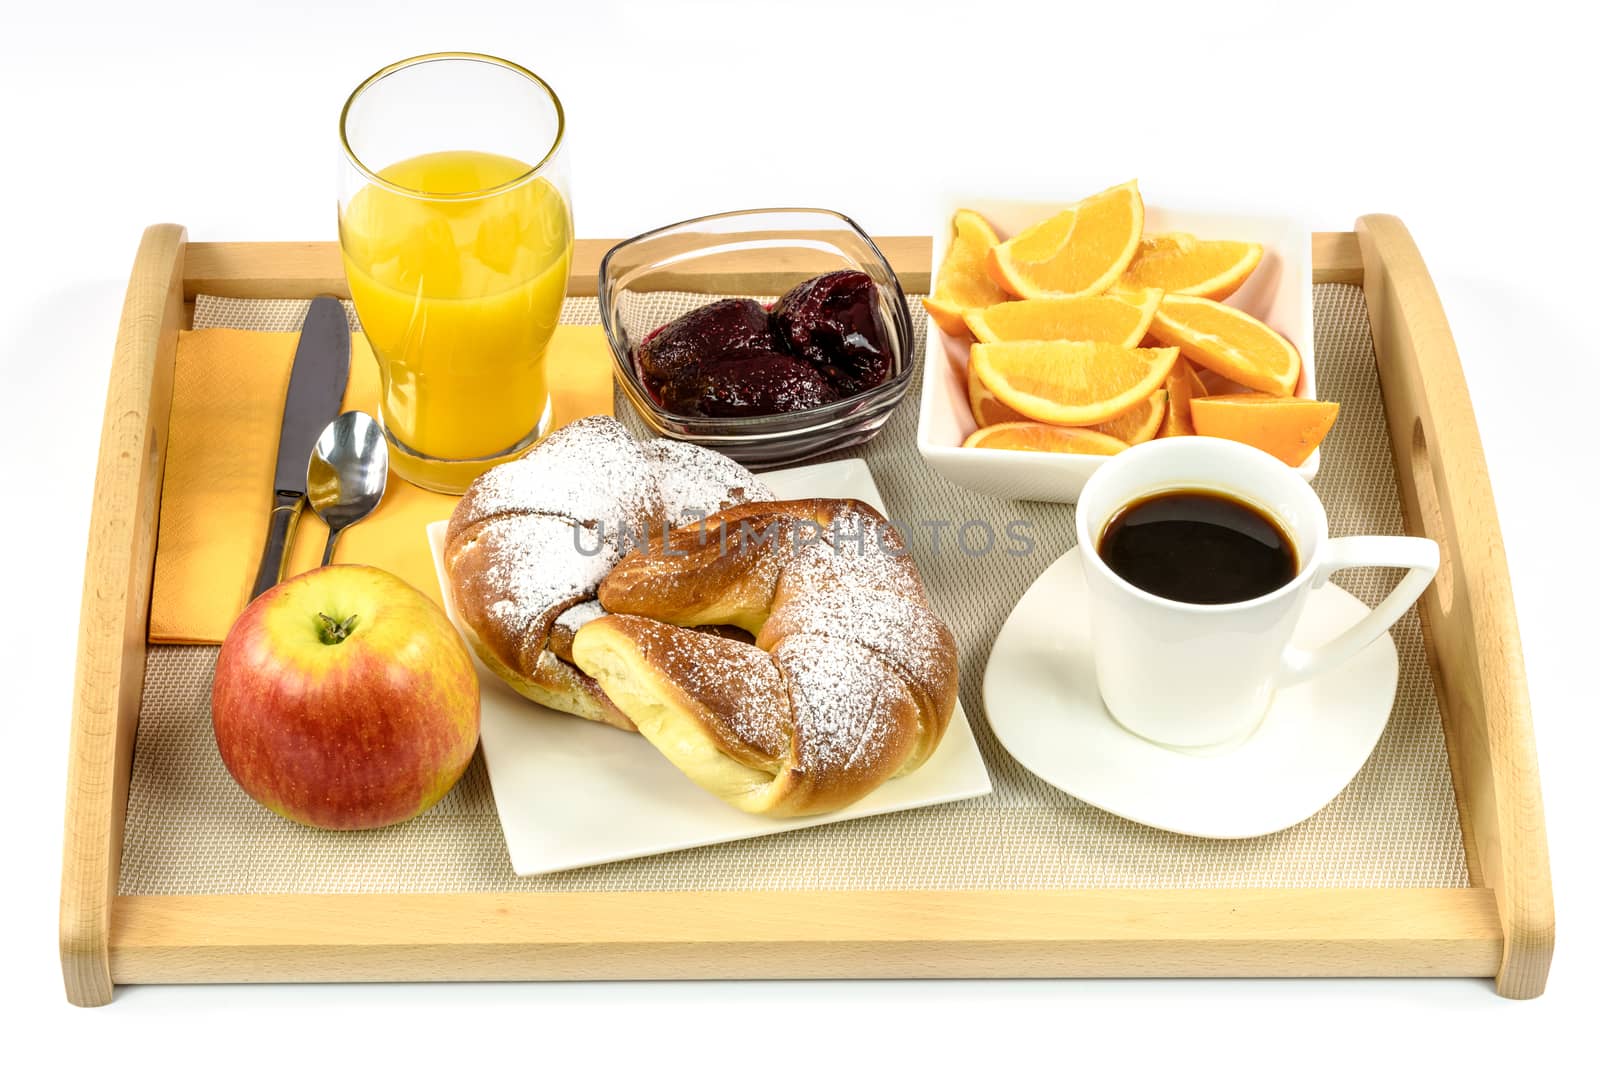 Hotel breakfast tray by wdnet_studio